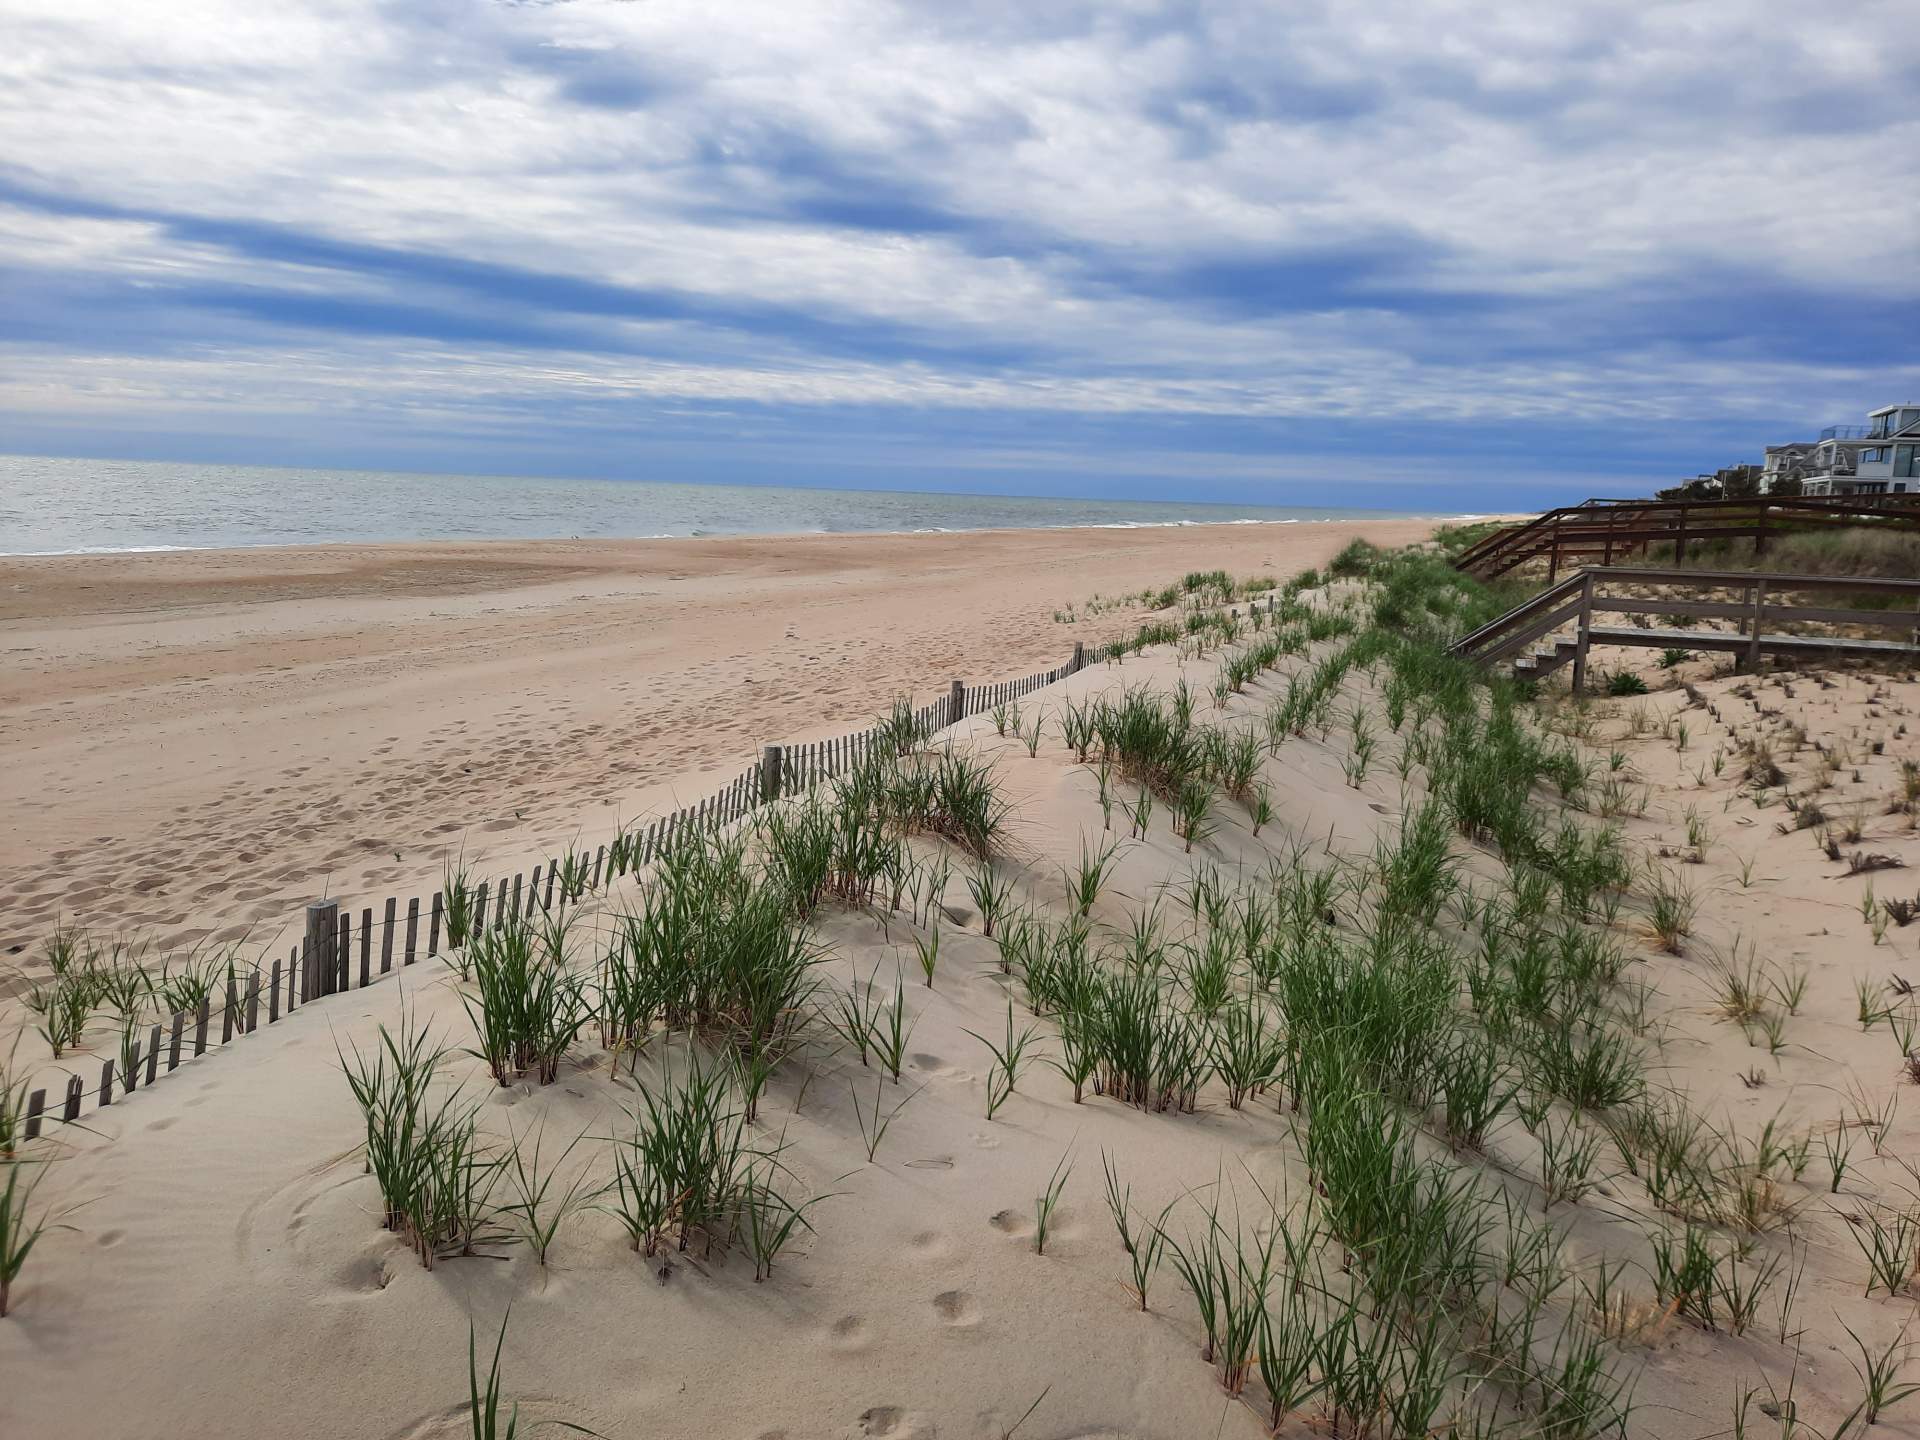 Ocean Ridge dune development 2 years after installing dune fence